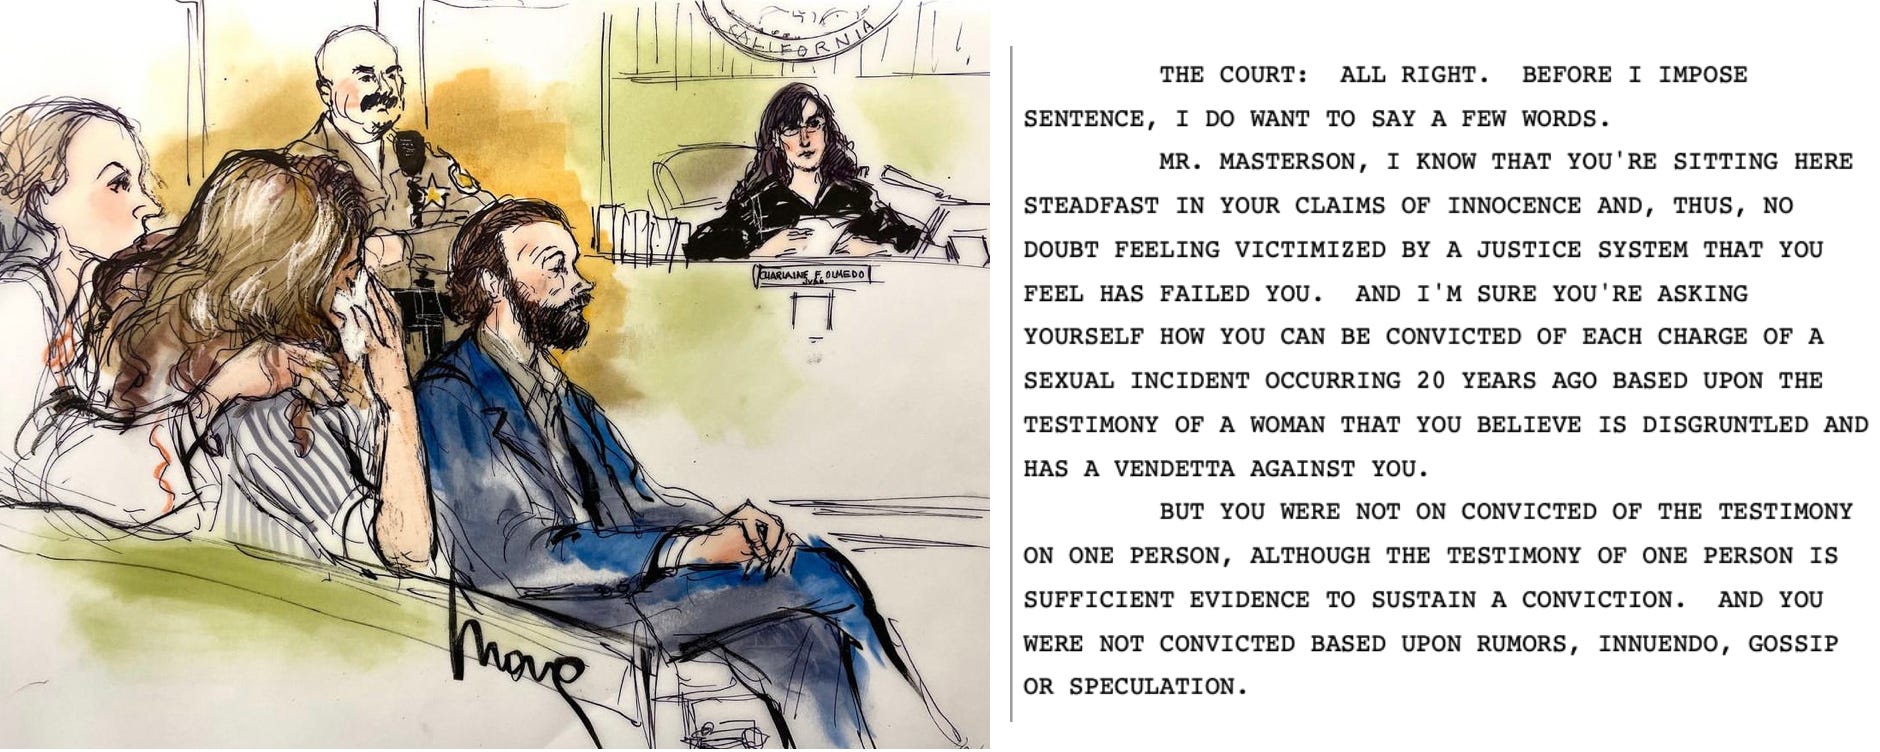 Victims, judge speak at Danny Masterson's rape sentencing